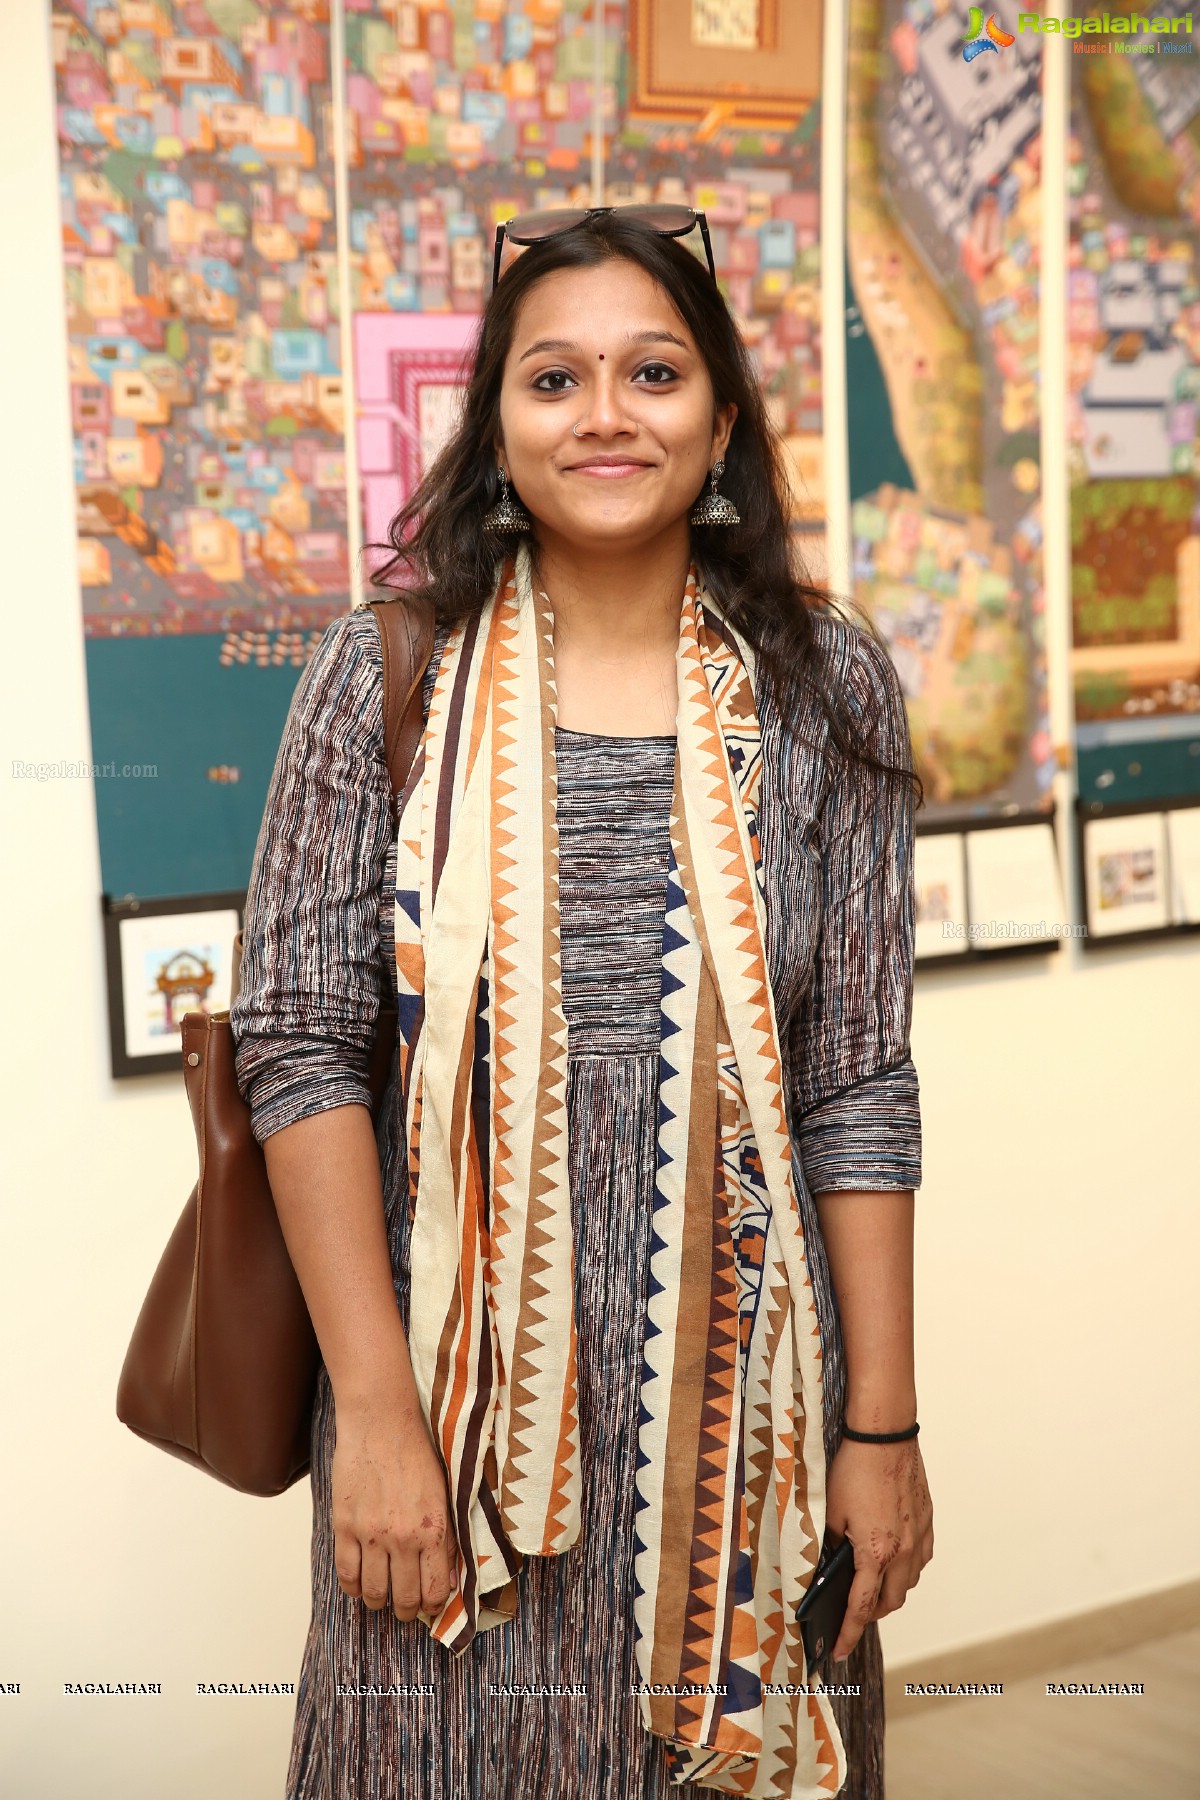 Braj - Architecture Of The Parikrama Exhibition by Students of KRVIA & ADFI at Kalakriti Art Gallery